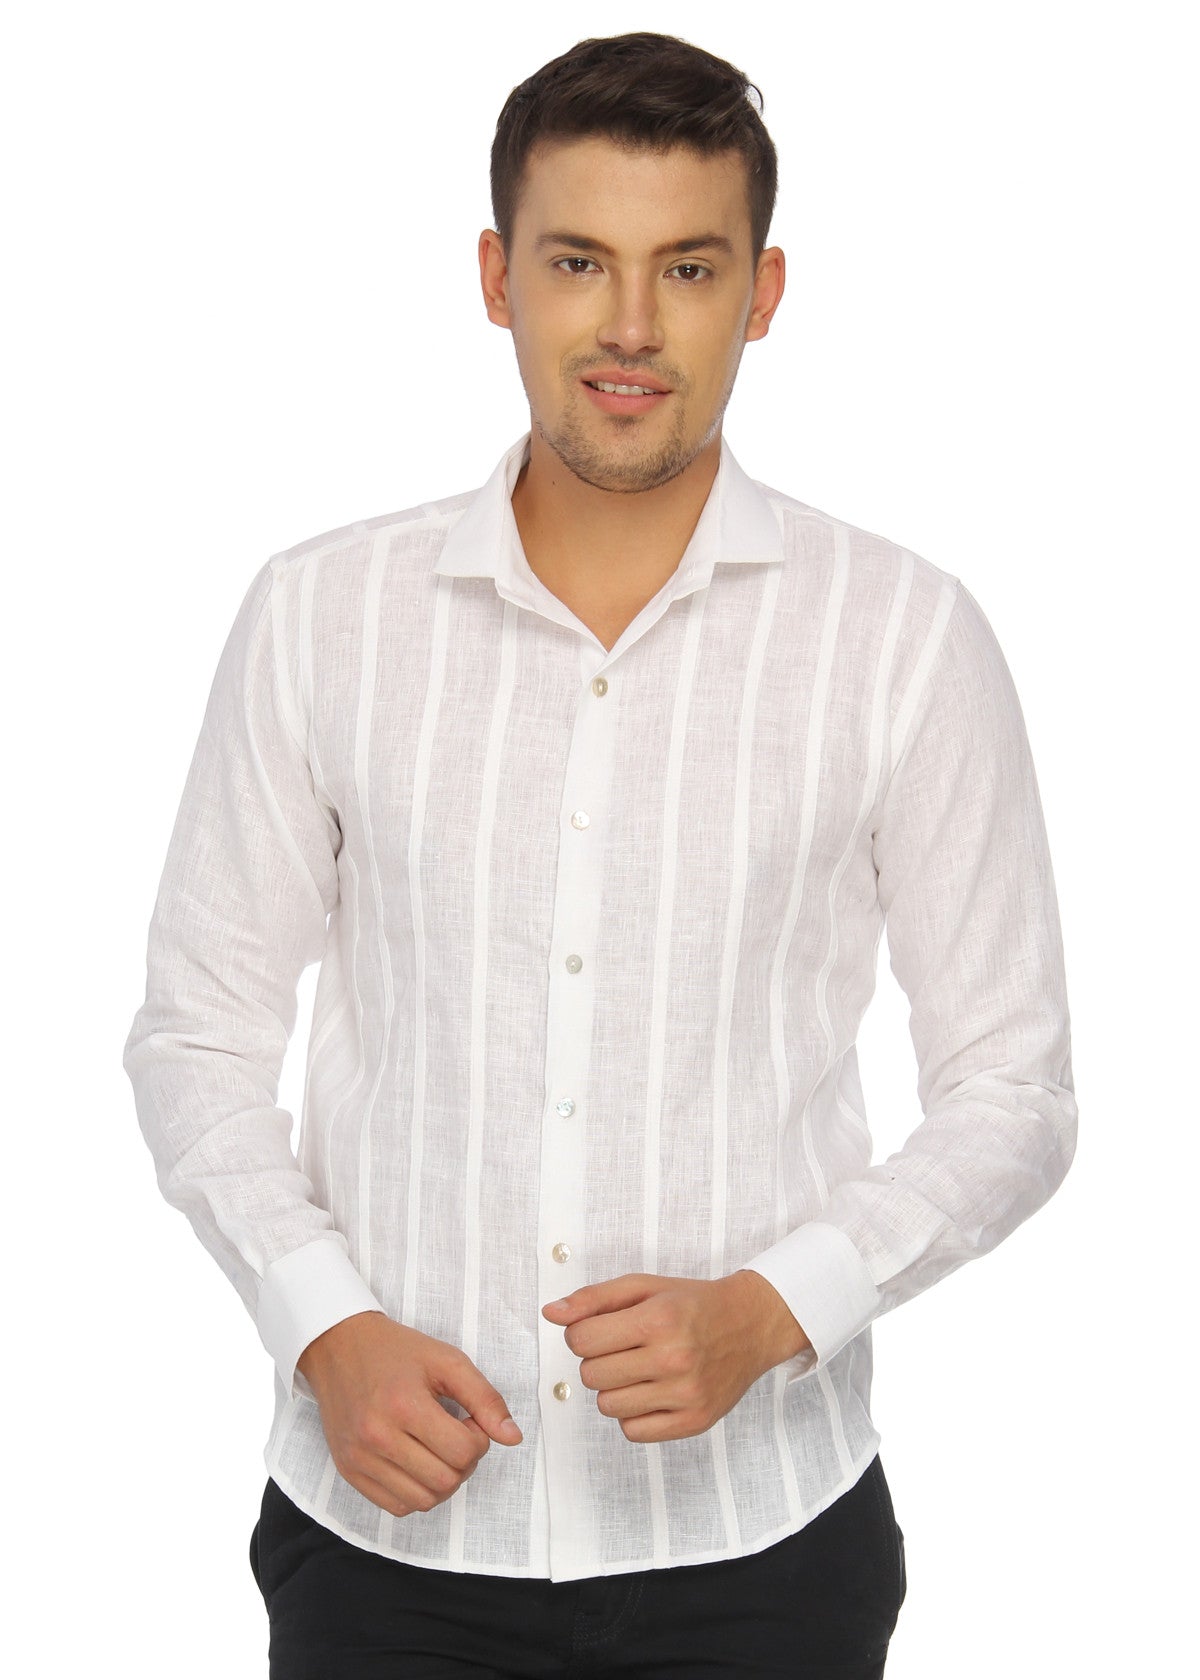 White Pleated Shirt - MM0477